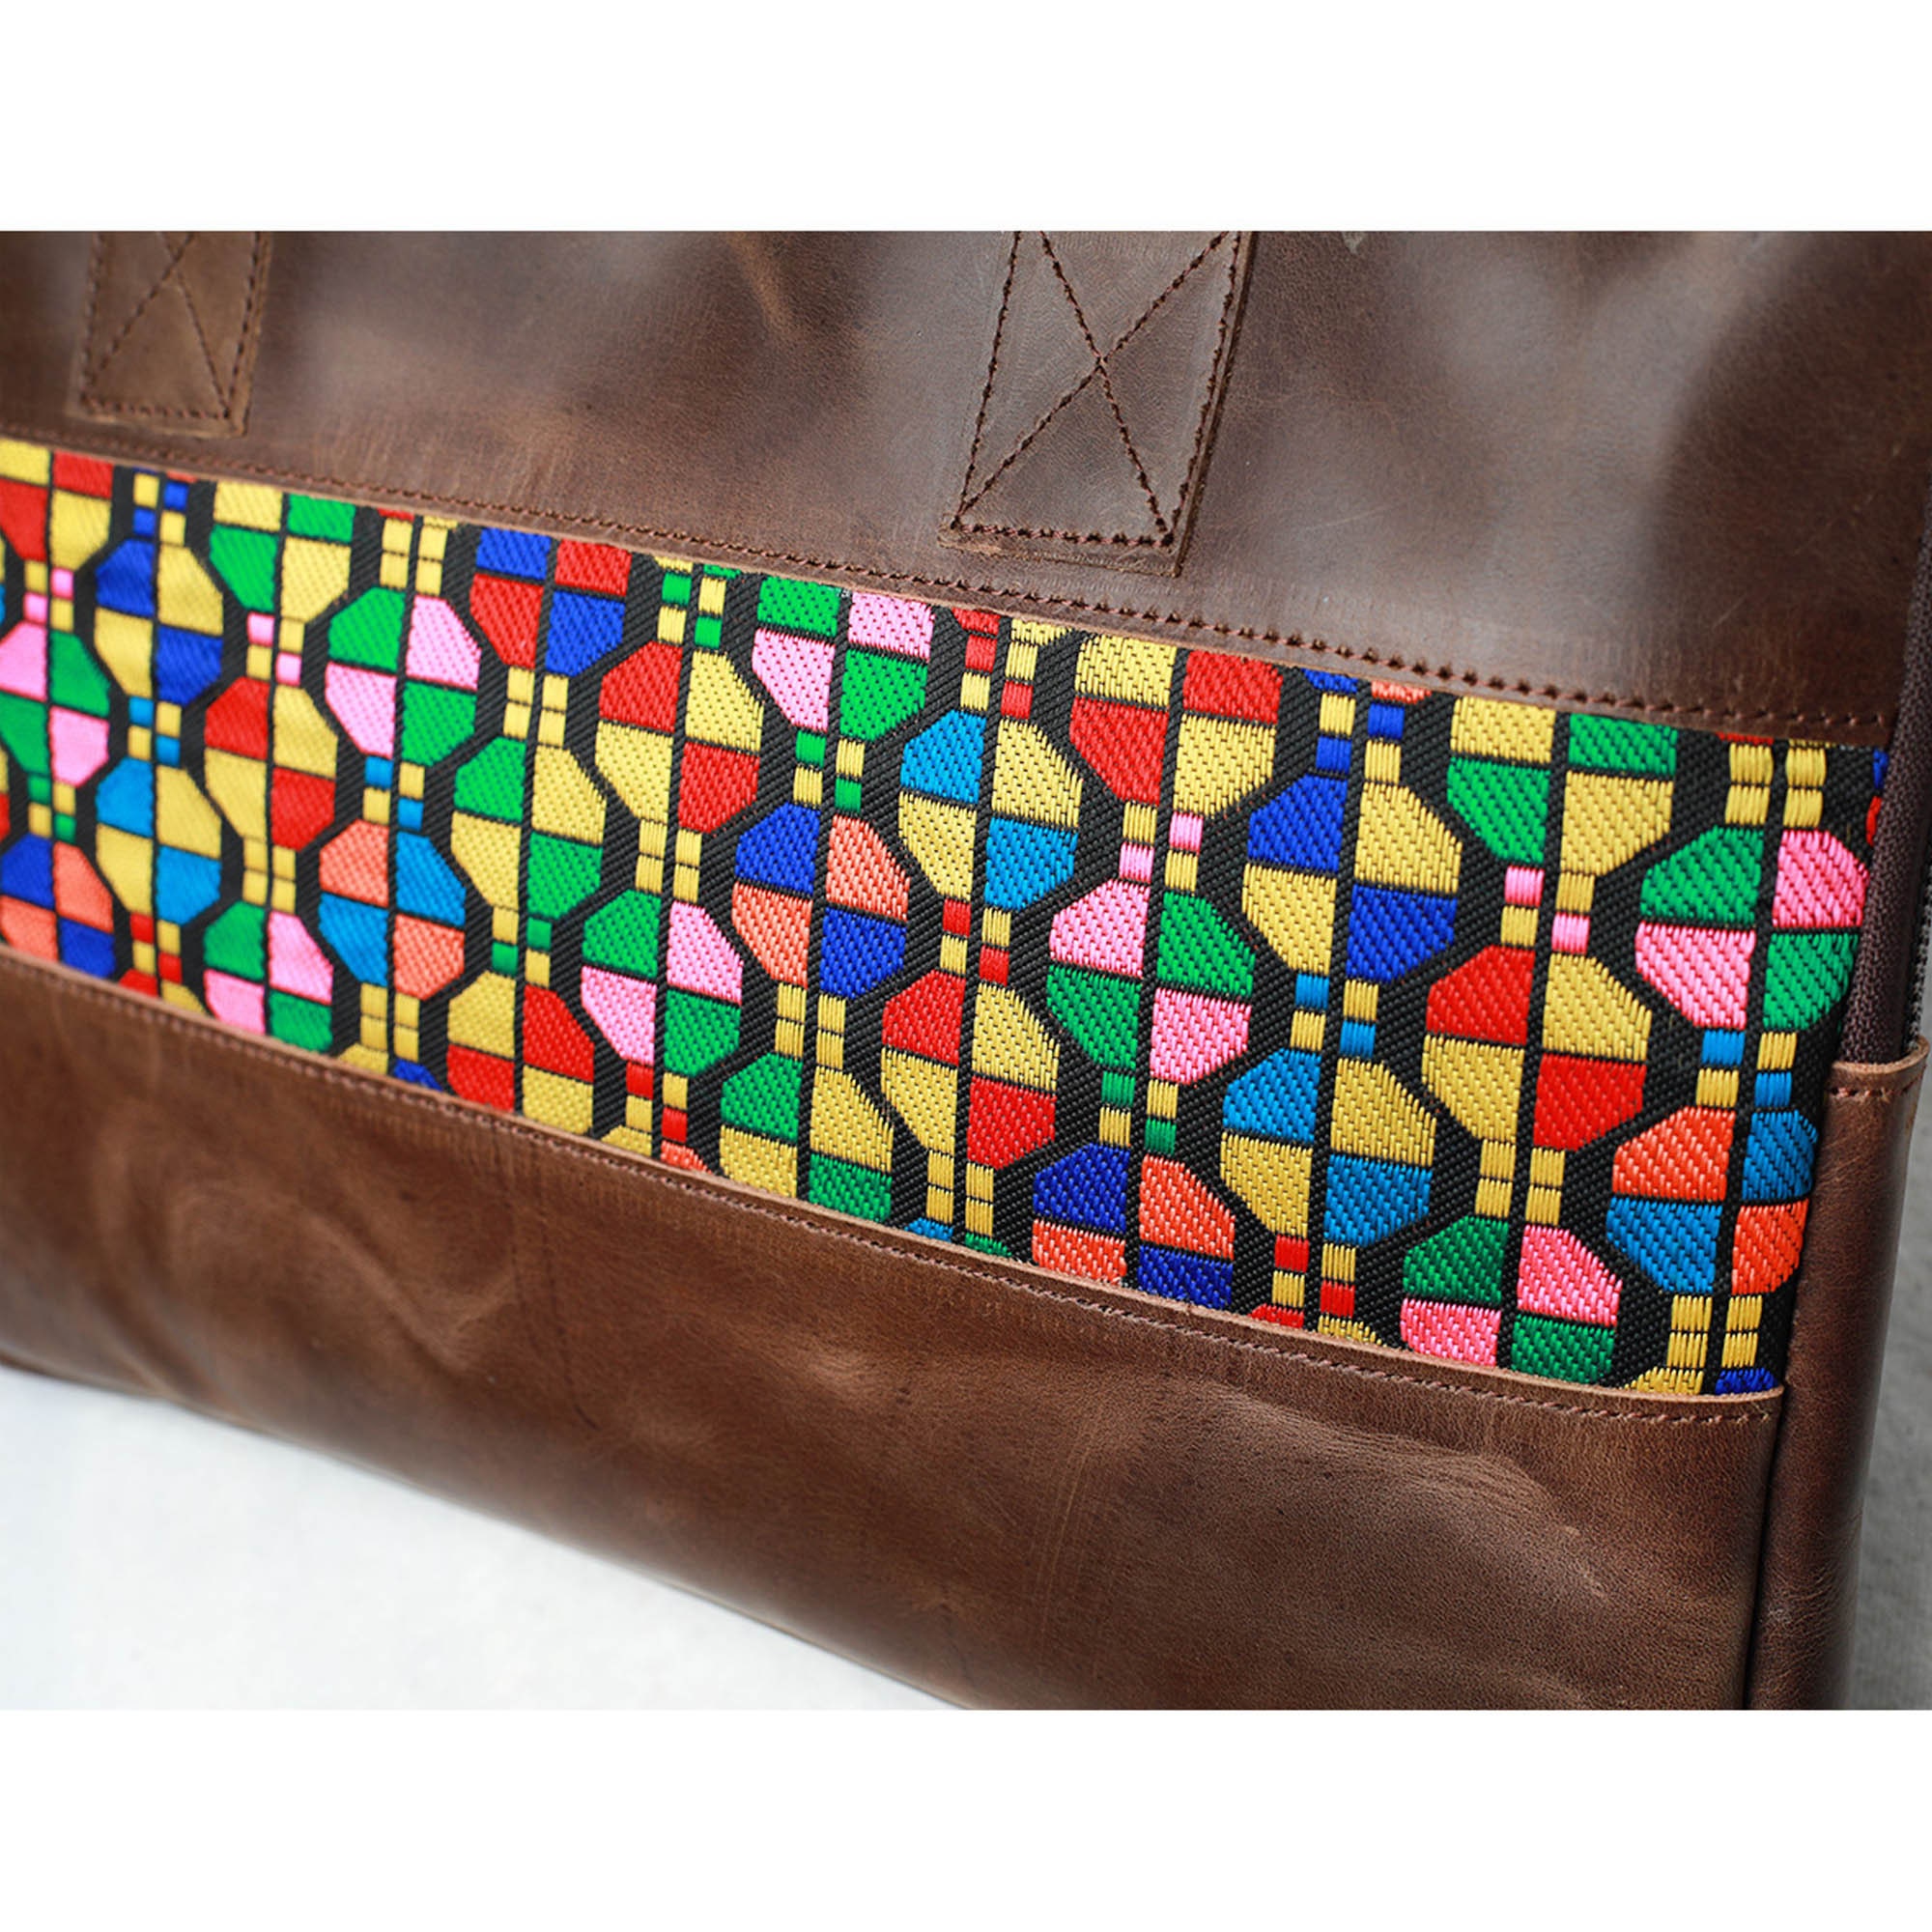 Genuine Leather Cross-Body Laptop Bag Yonas - Handmade & fair from Ethiopia